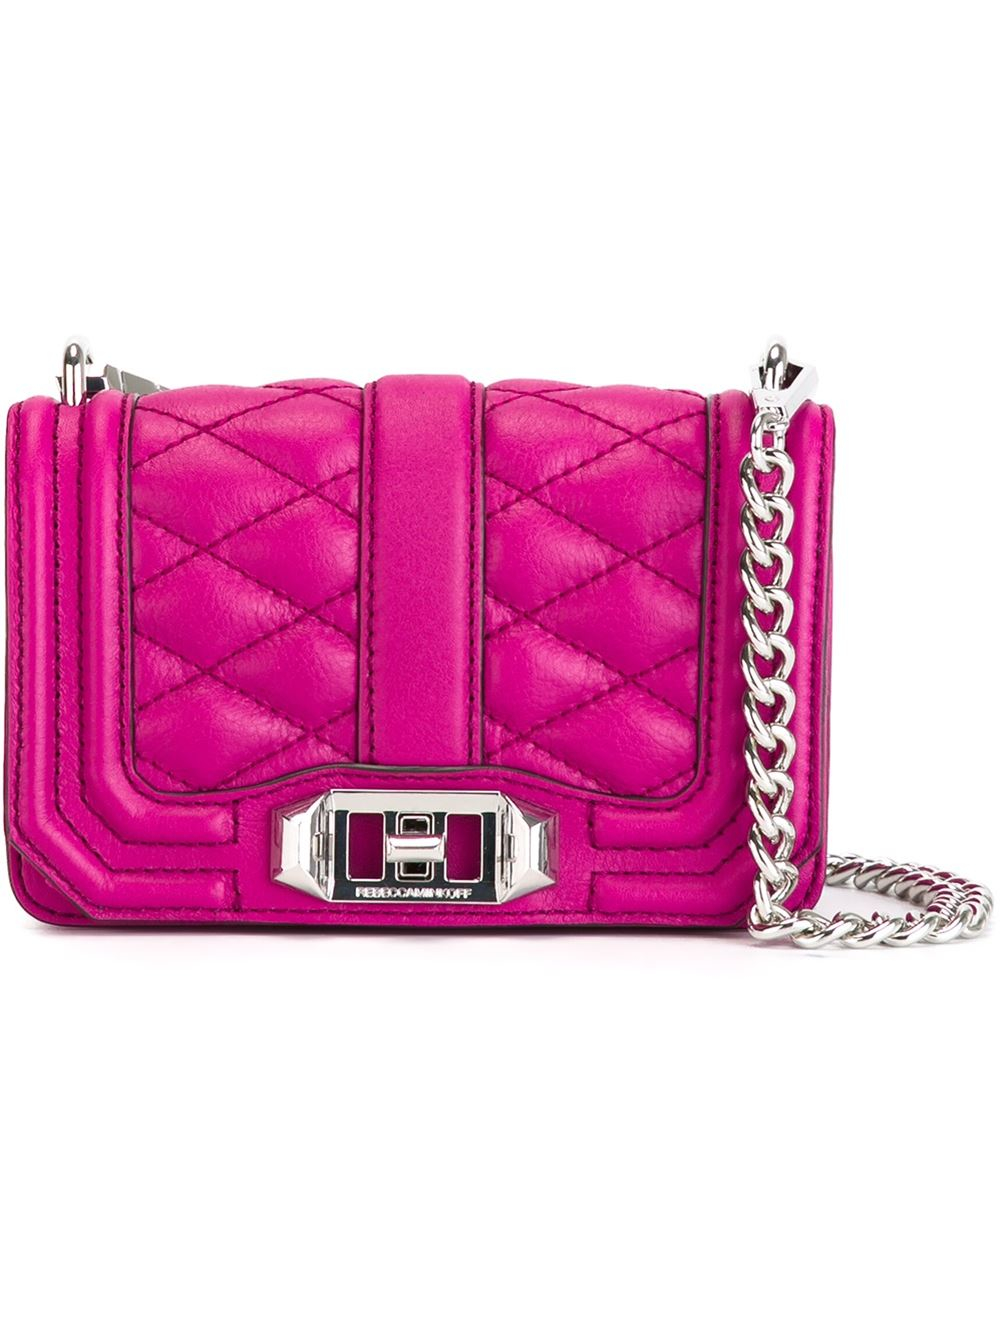 Rebecca minkoff 'love' Cross Body Bag in Pink | Lyst